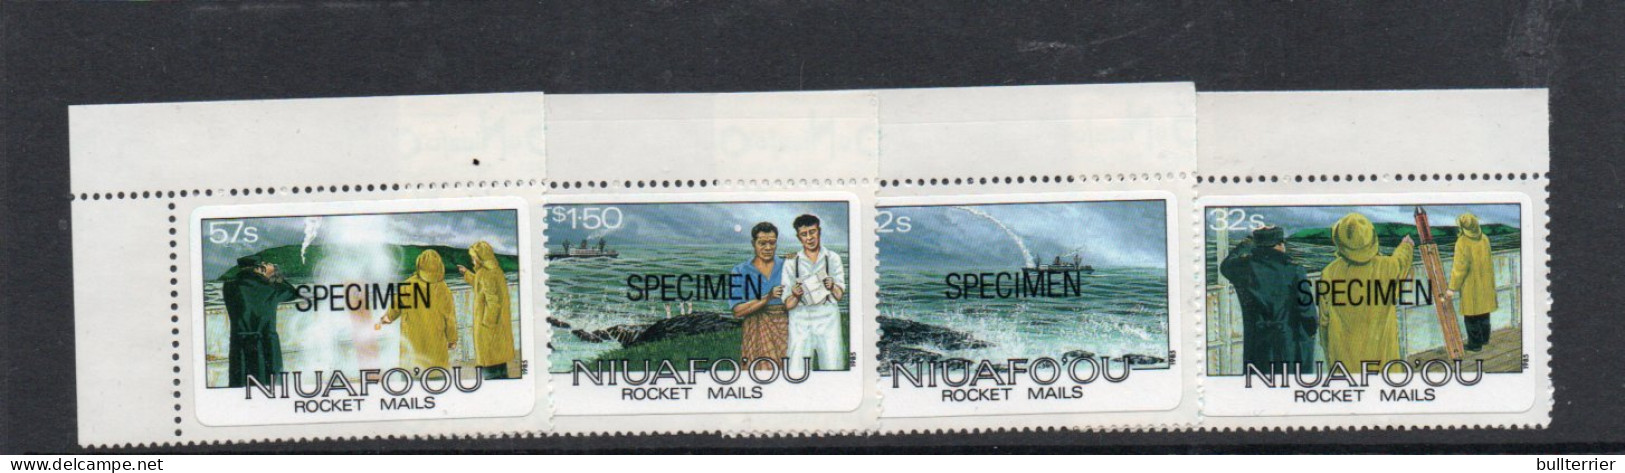 NIUAFOOU - 1985 - ROCKET MAILS SET OF 4   " SPECIMENS"  MINT NEVER HINGED  - Altri - Oceania